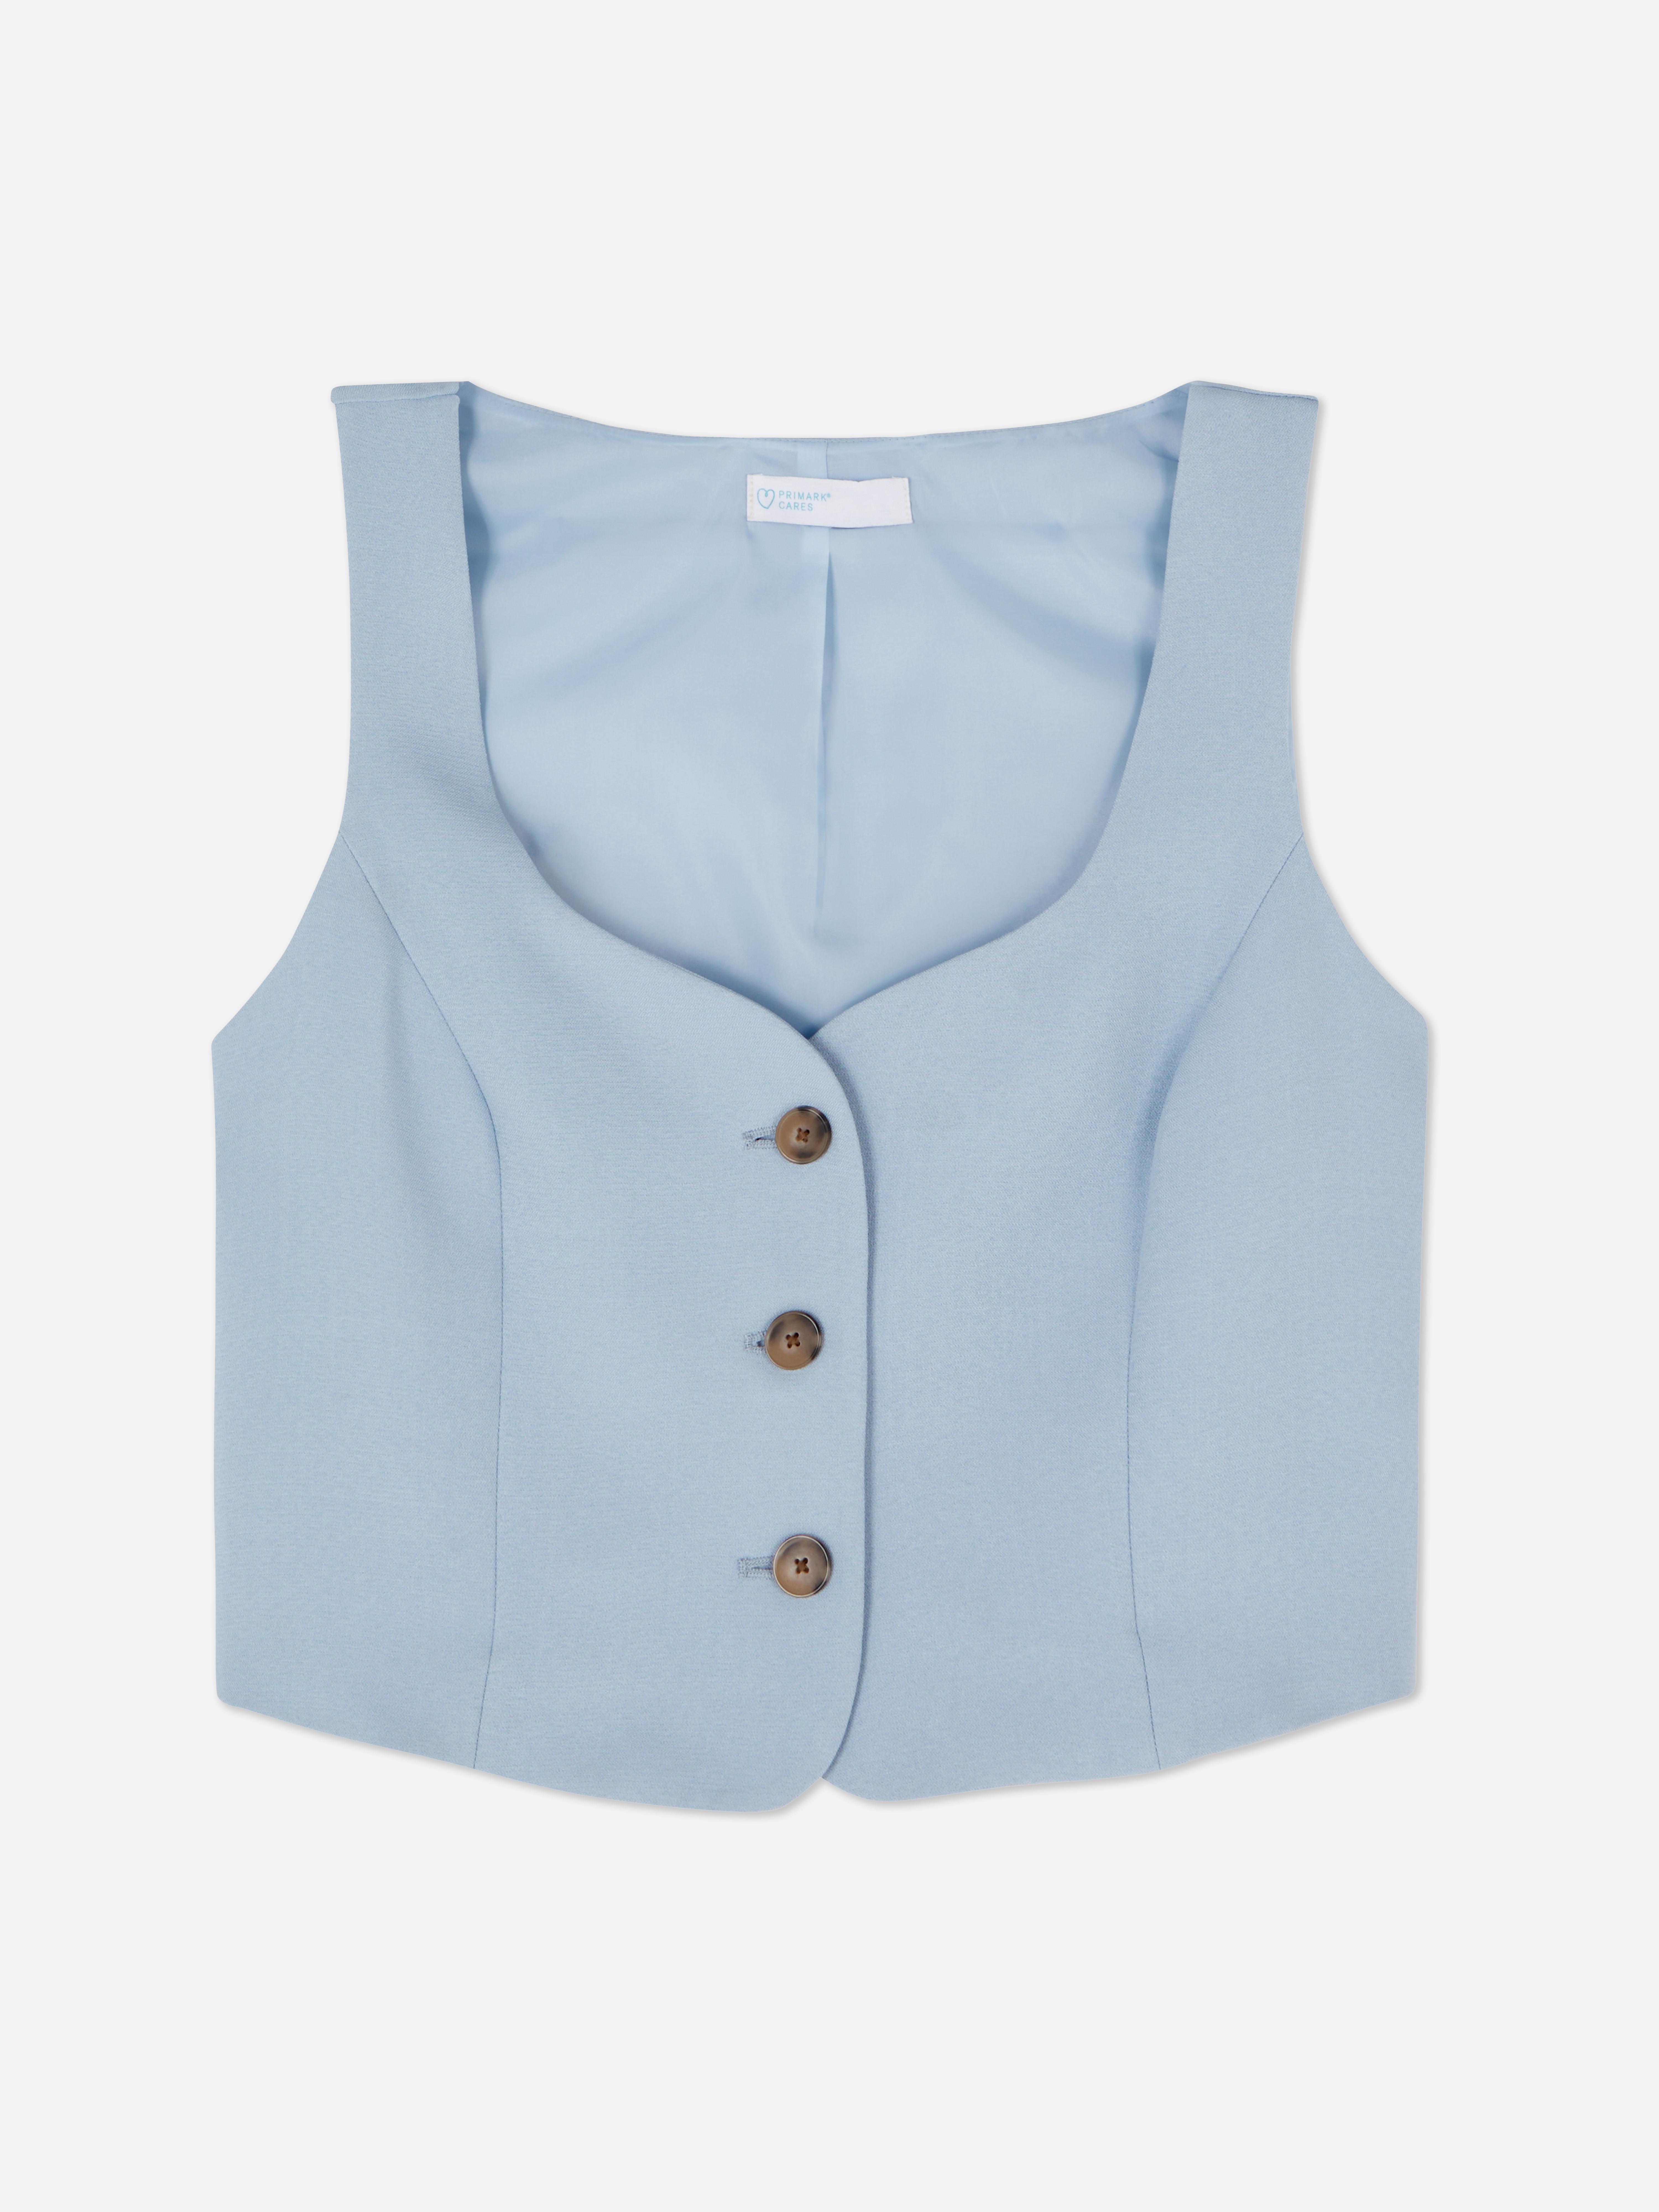 Primark Brand New Thermal Vest For Girls –